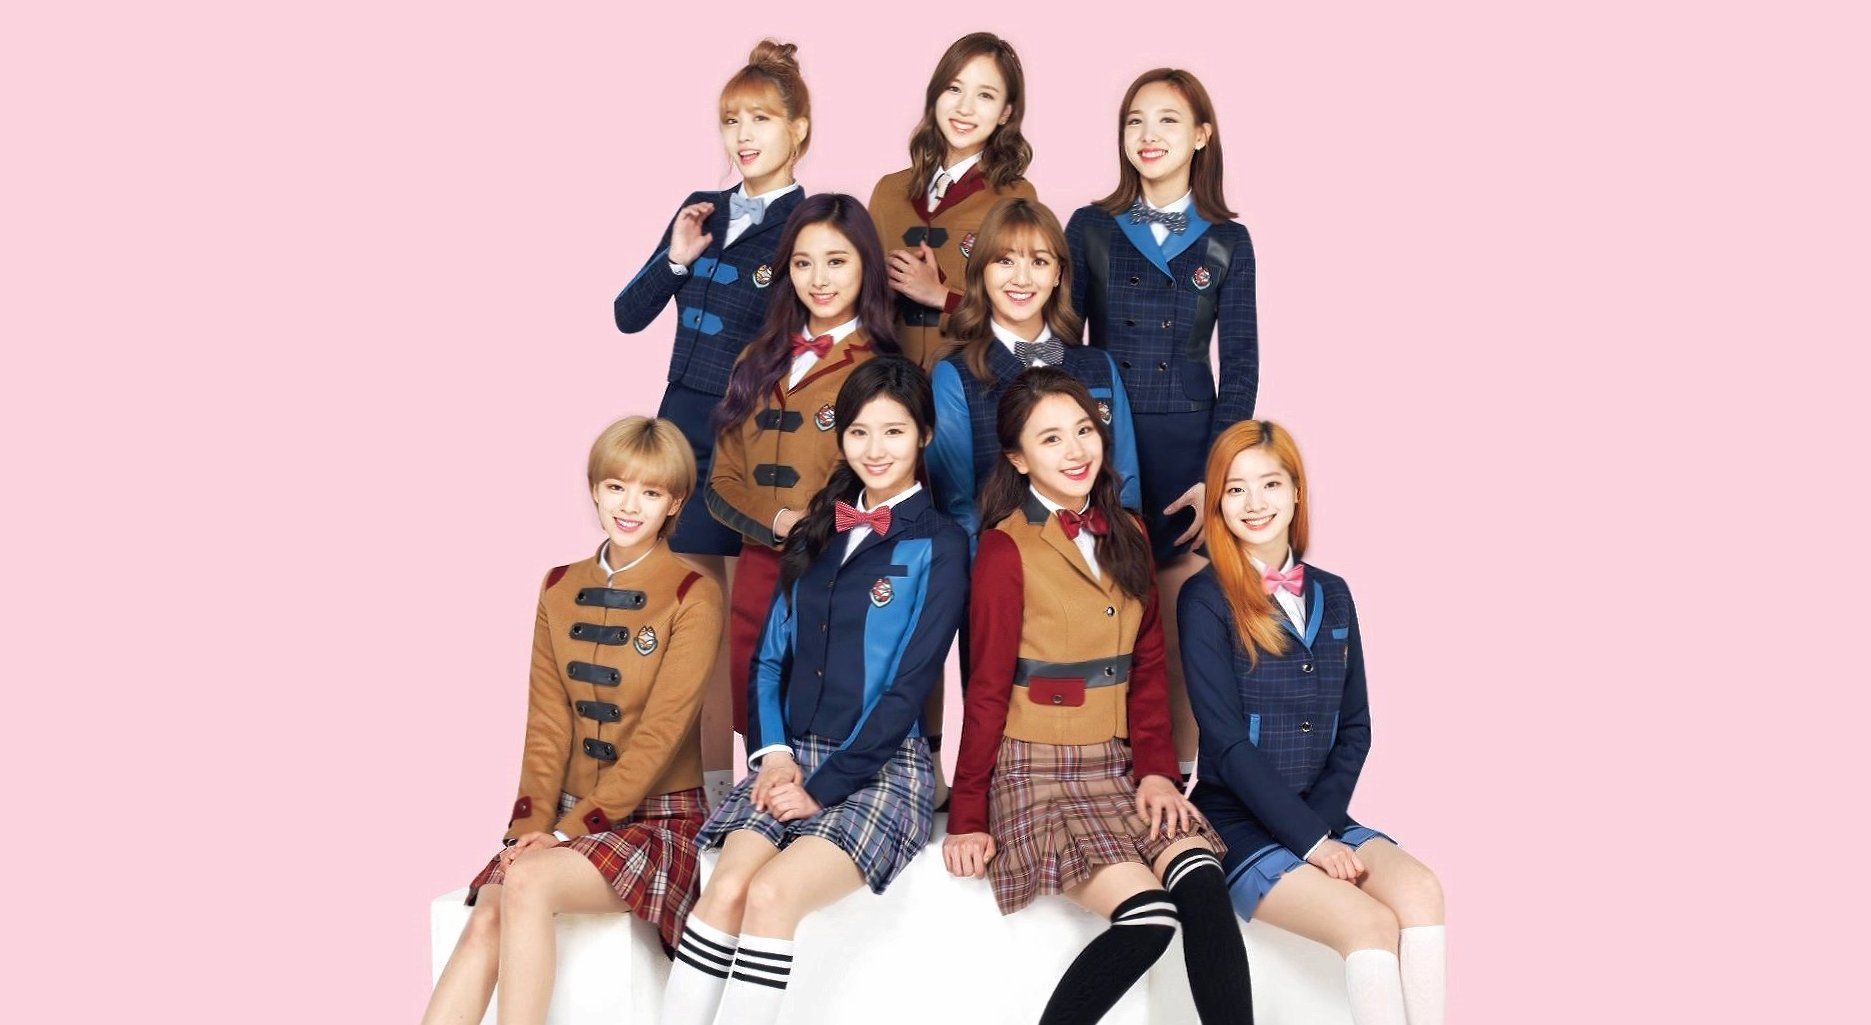 Twice wallpaper HD. Music bands, Wallpaper pc, Korean girl groups